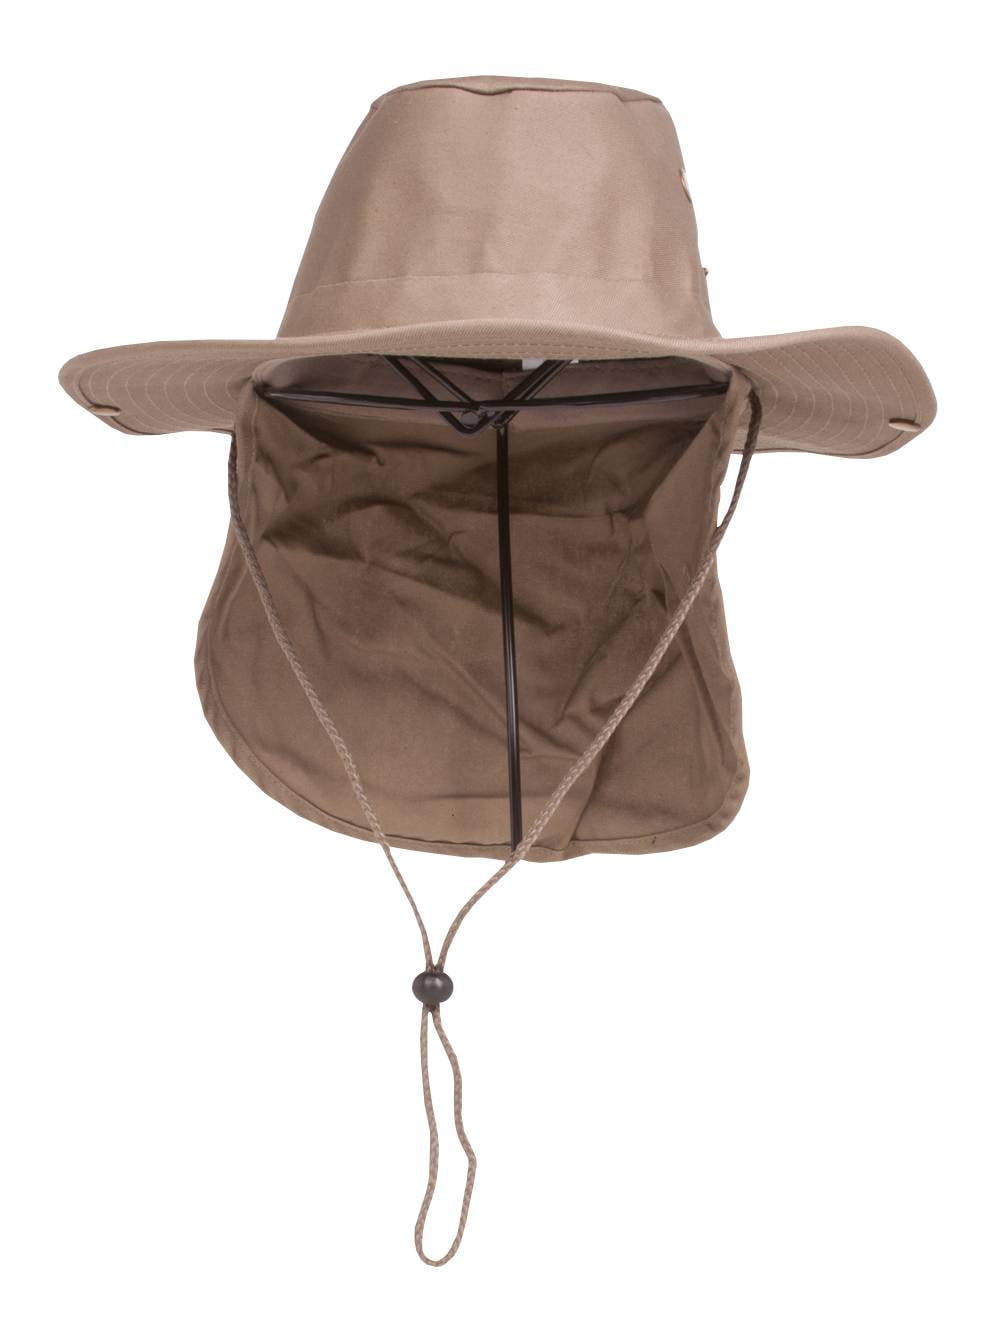 Top Headwear Safari Explorer Bucket Hat With Flap Neck Cover - Khaki -  X-Large